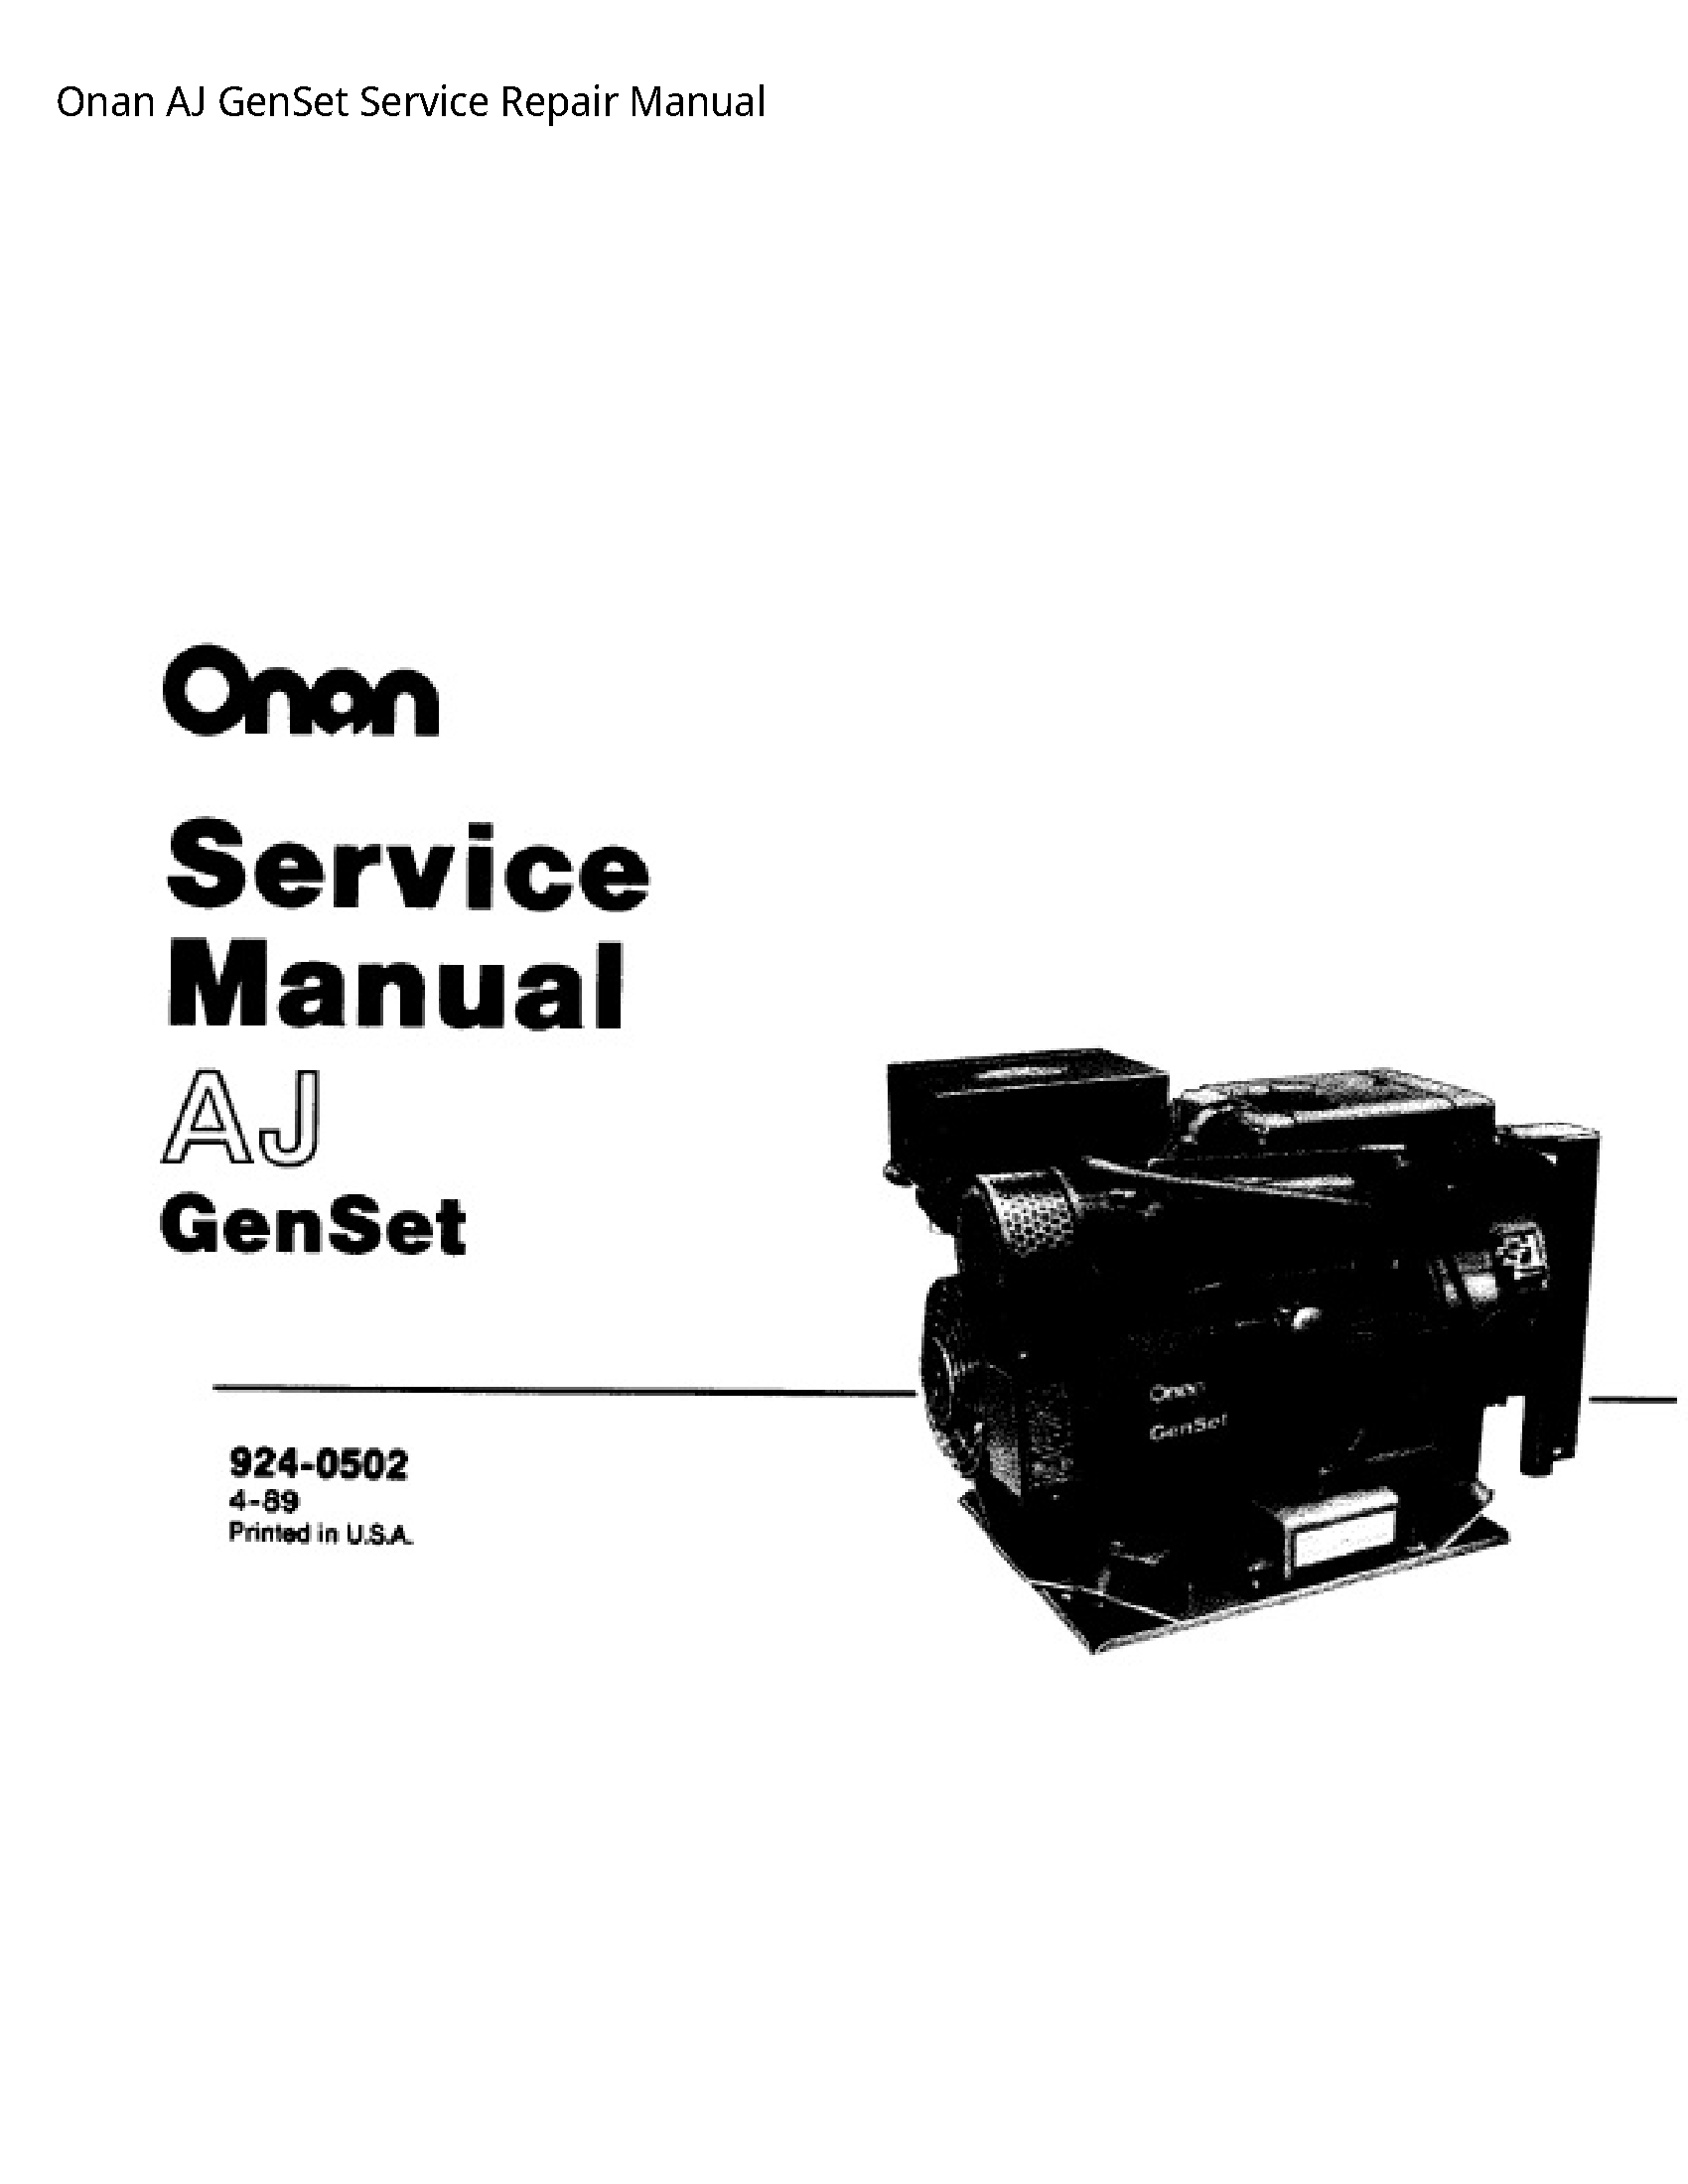 Onan AJ GenSet manual